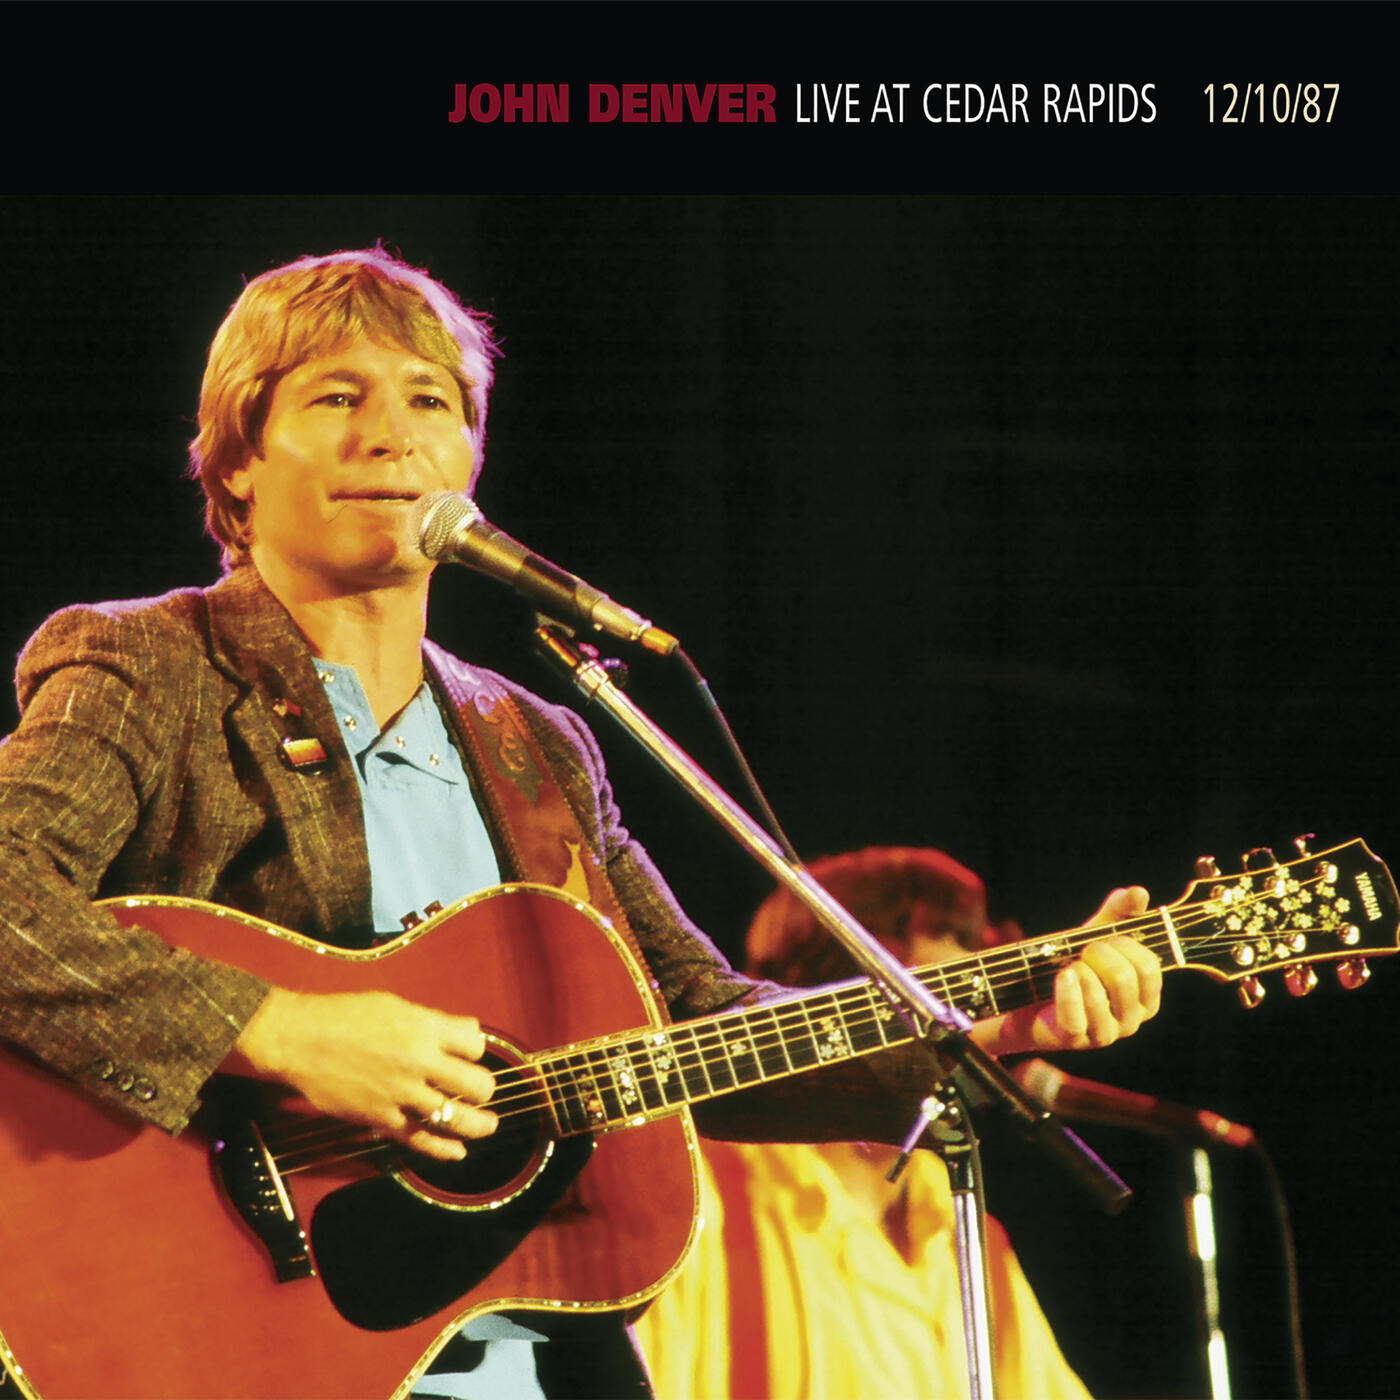 John Denver Live At Cedar Rapids 12/10/87 iHeart